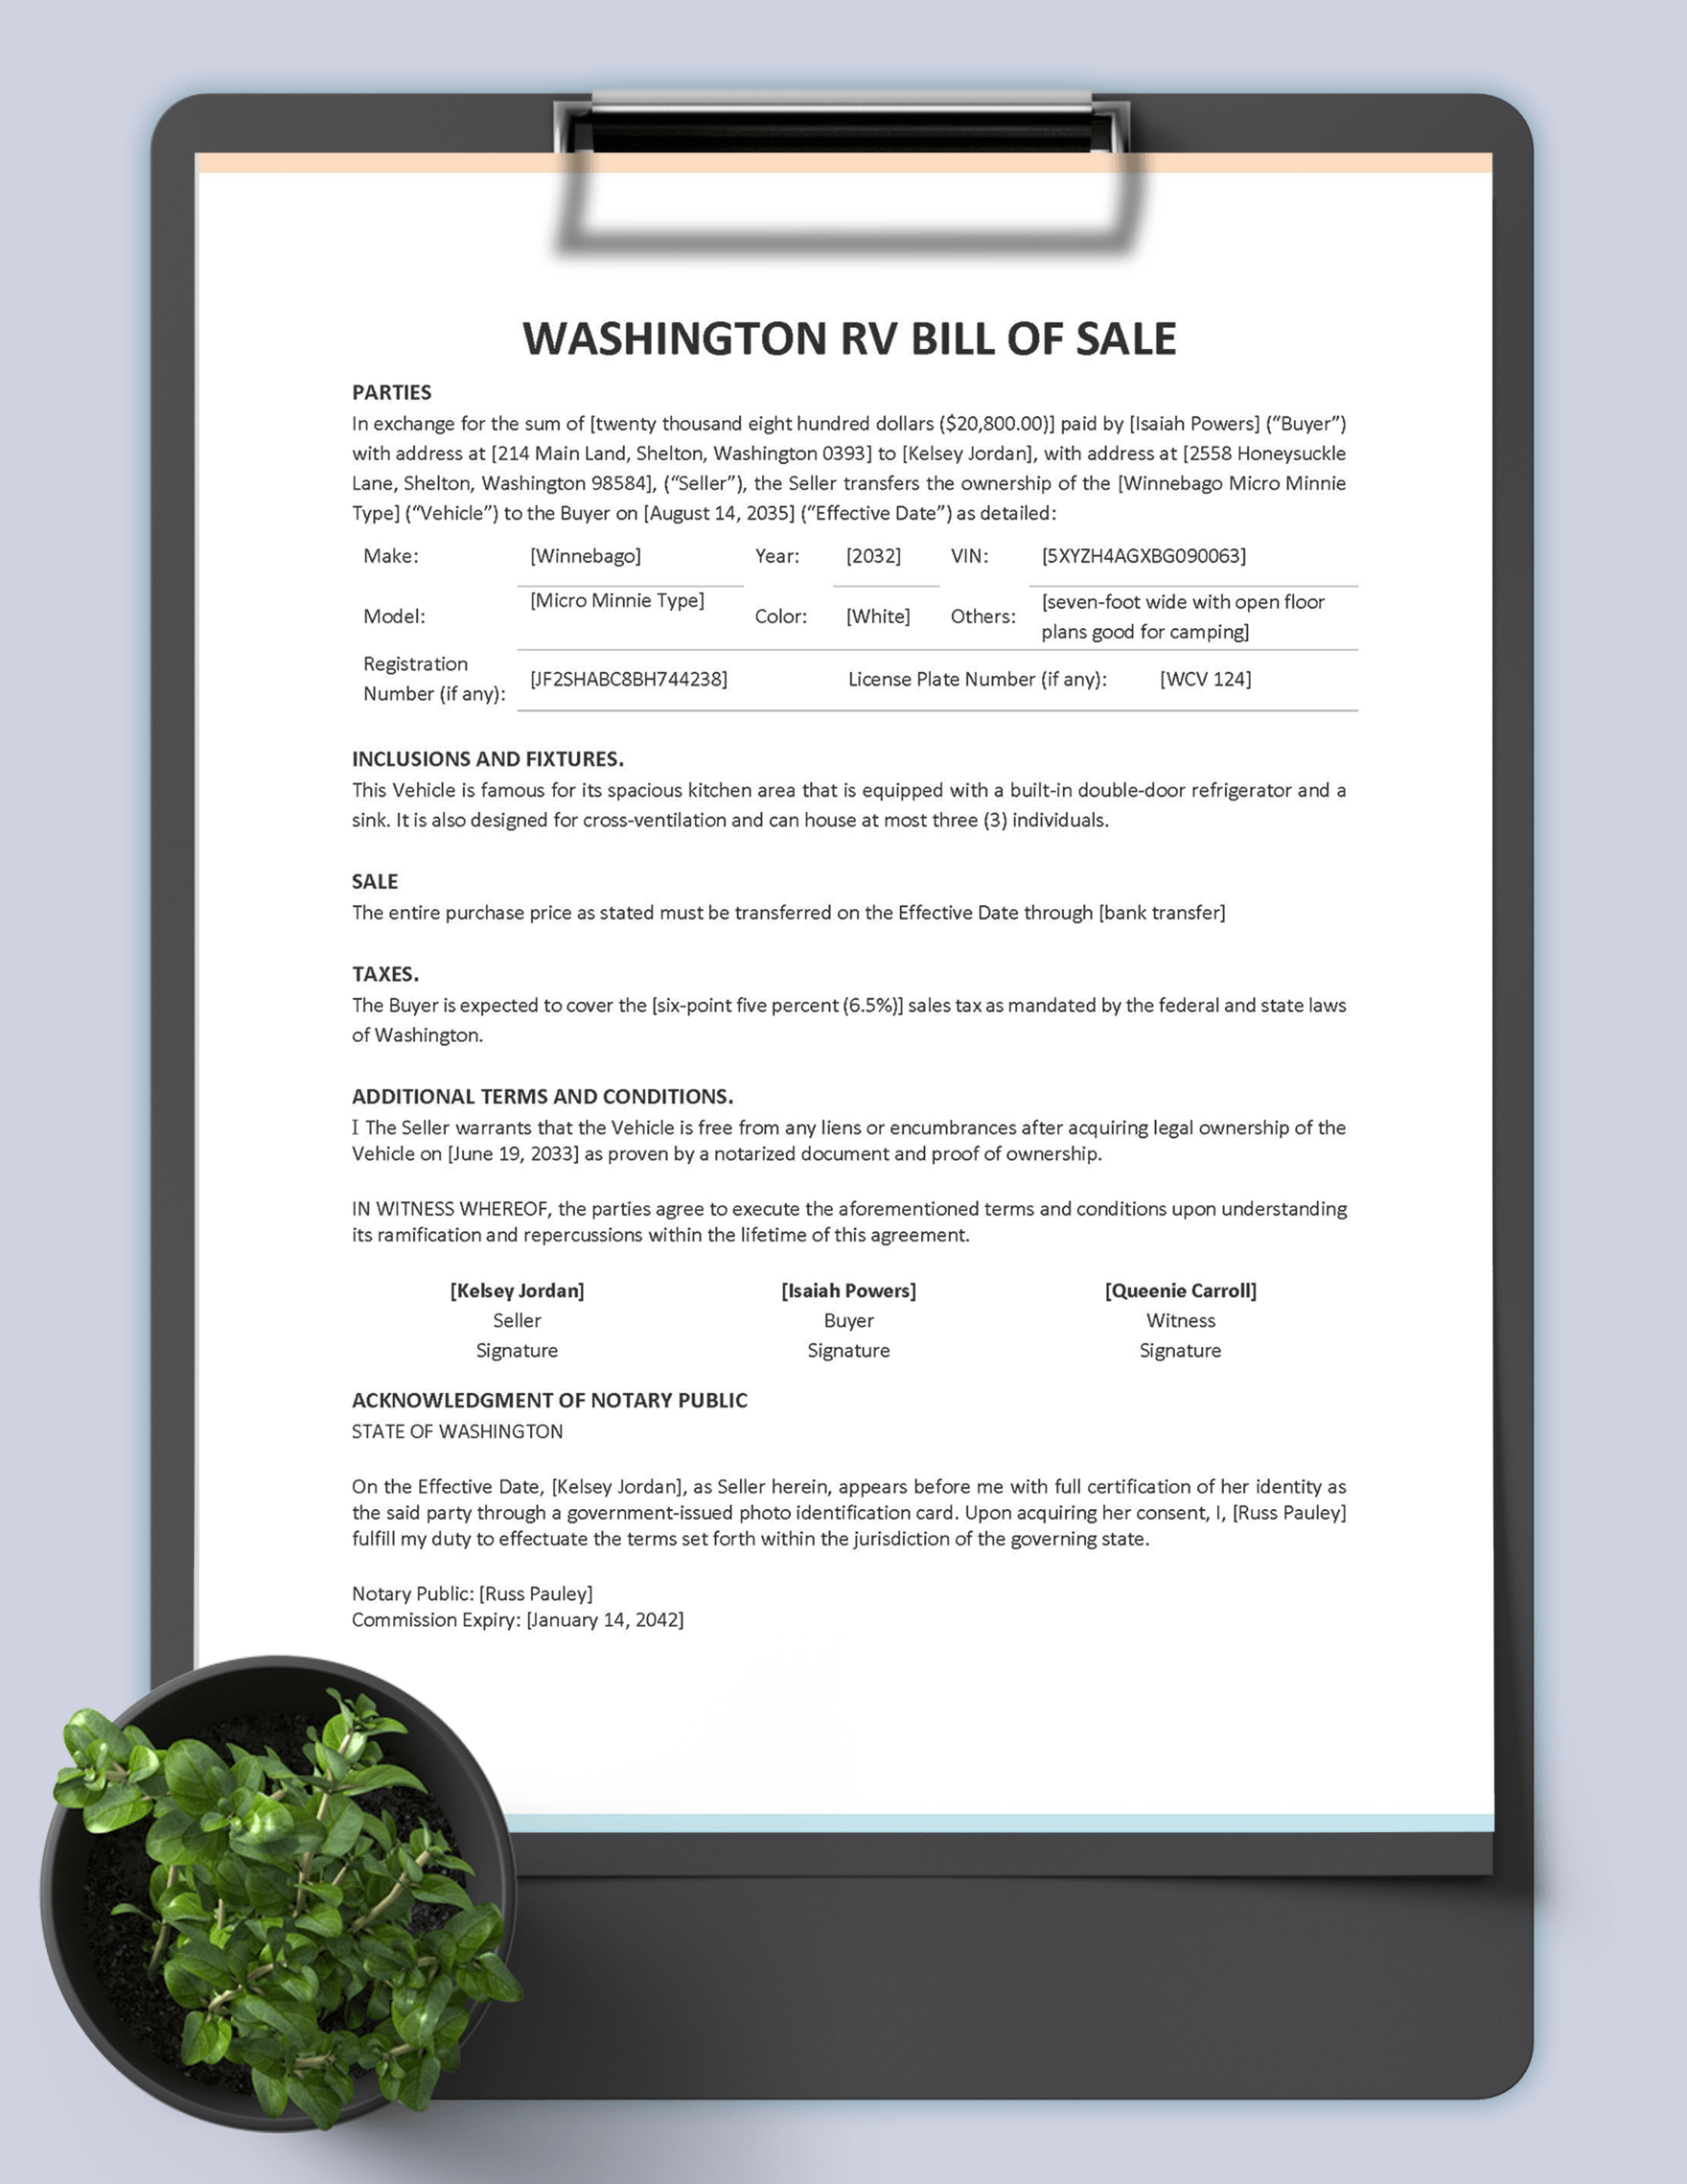 Washington RV Bill of Sale Template